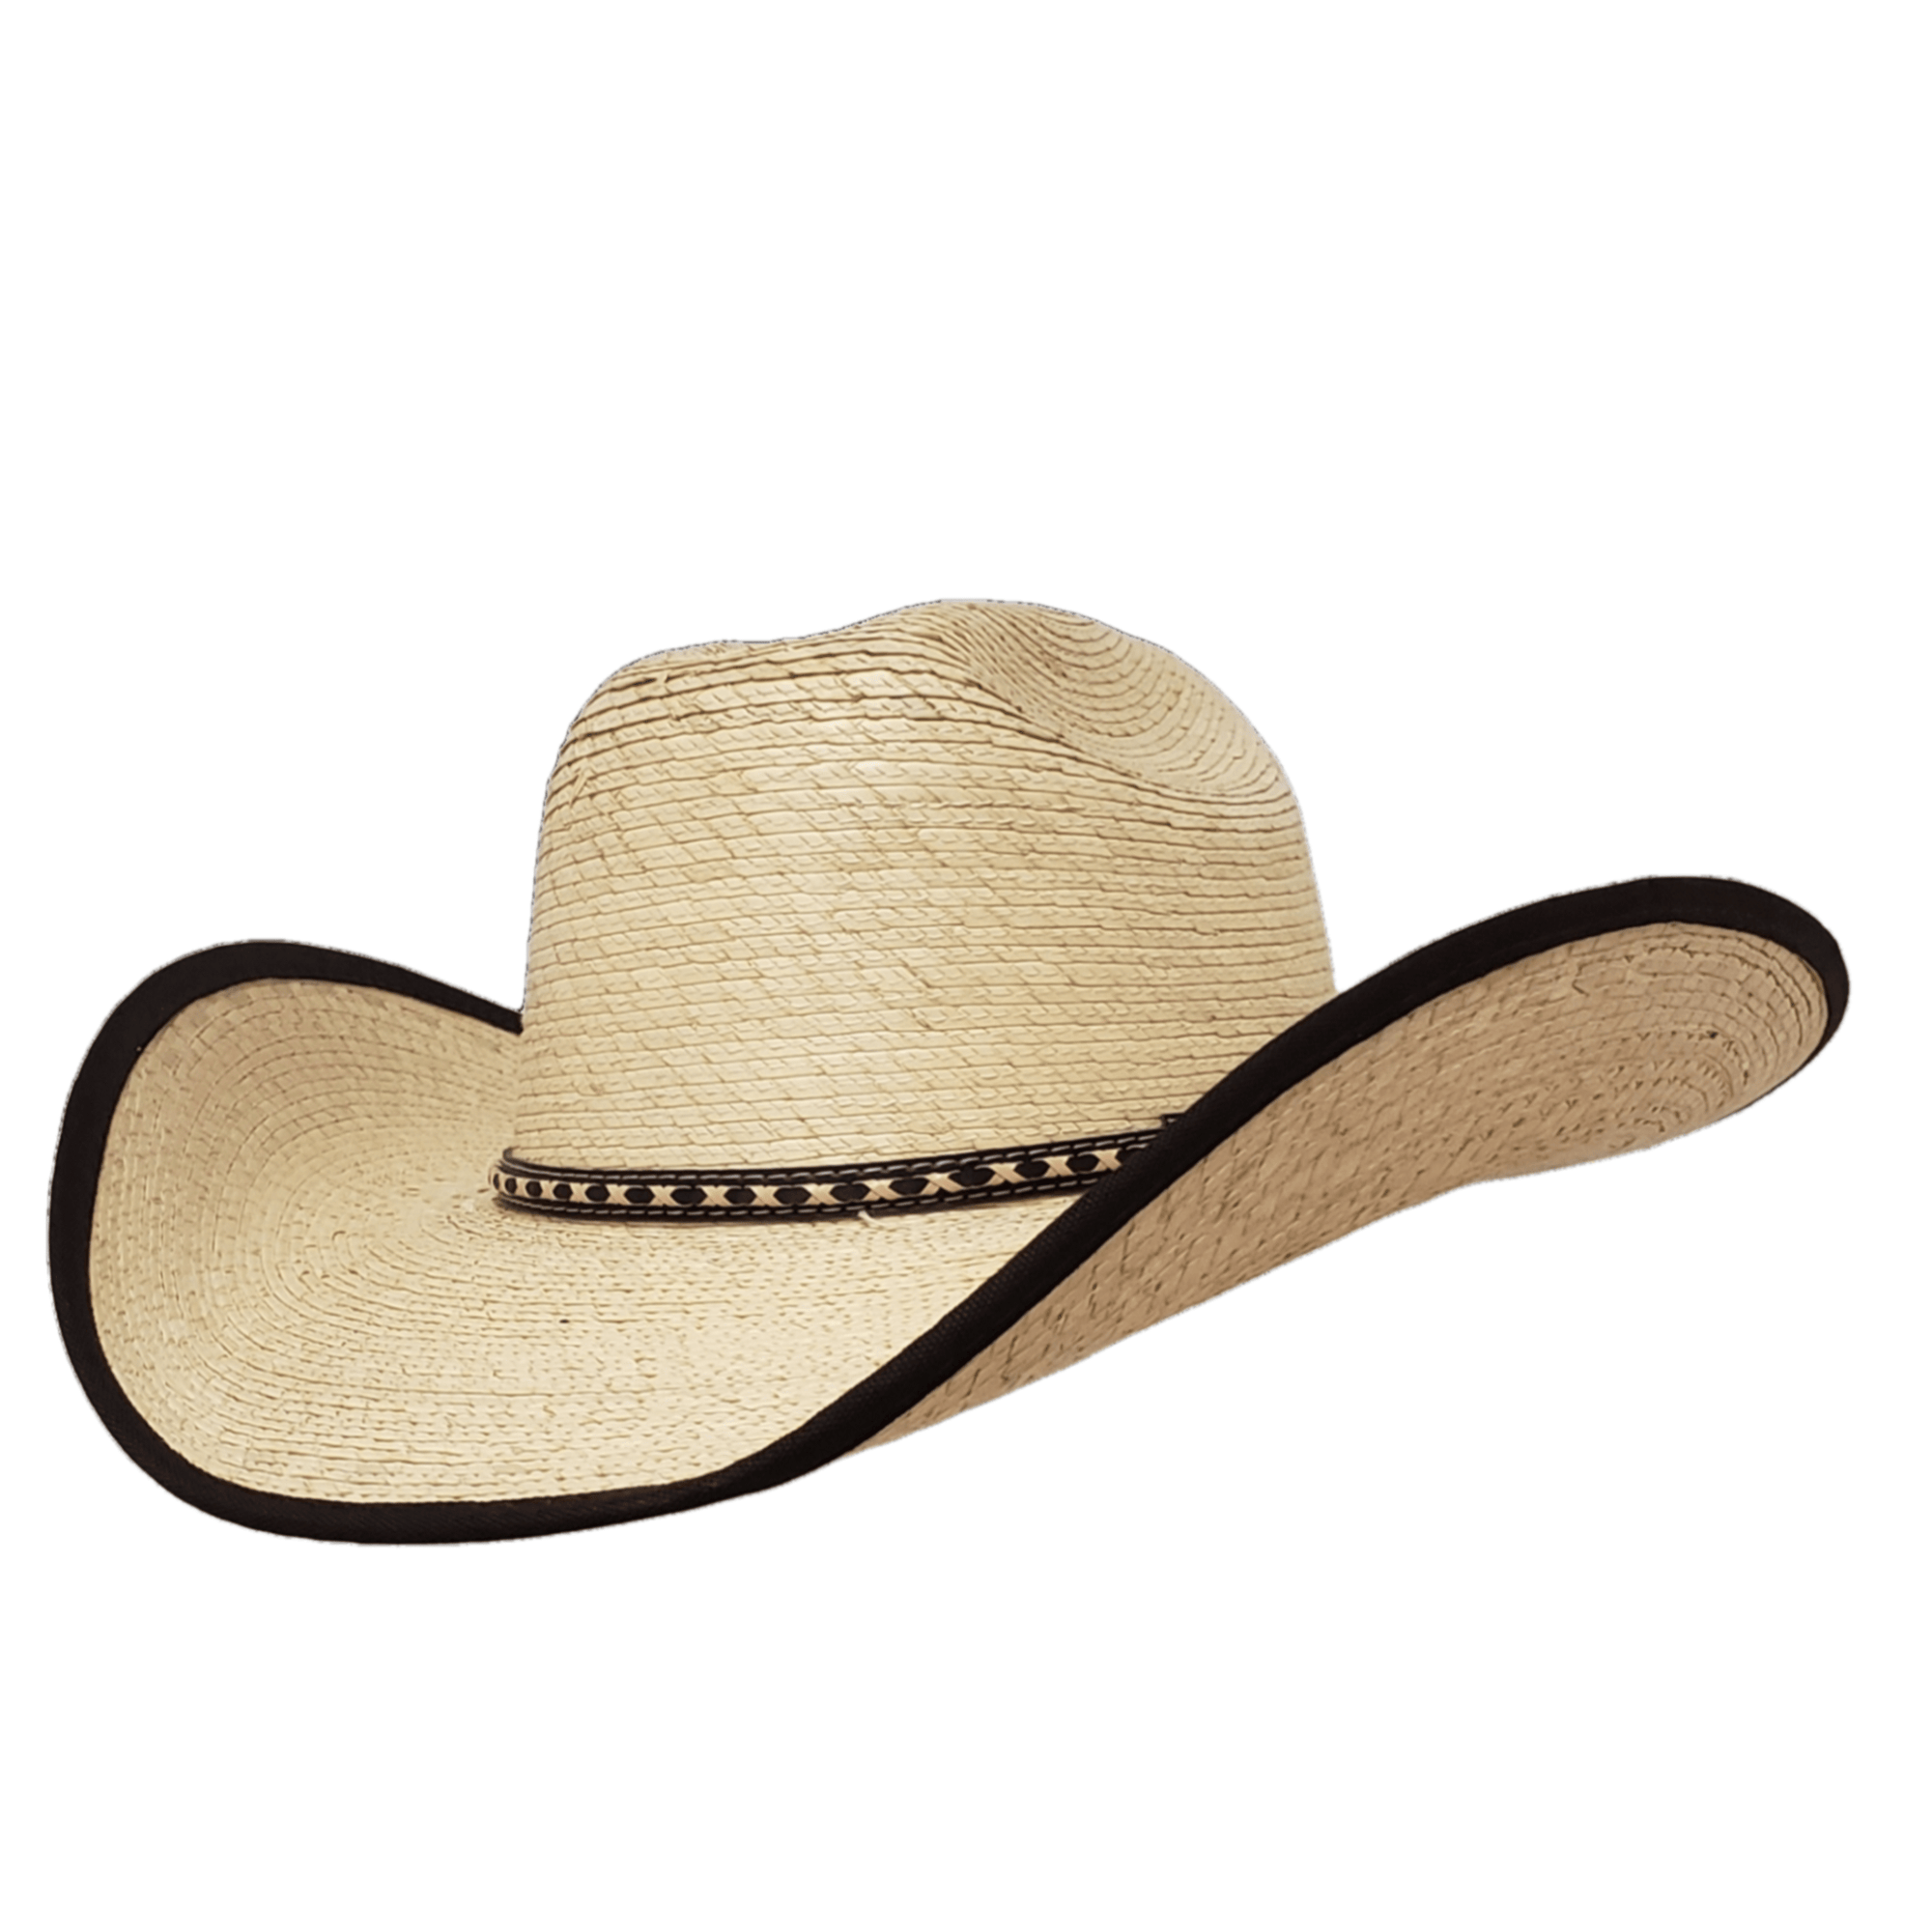 Gone Country Hats Men & Women's Hats Ponderosa Natural - Palm